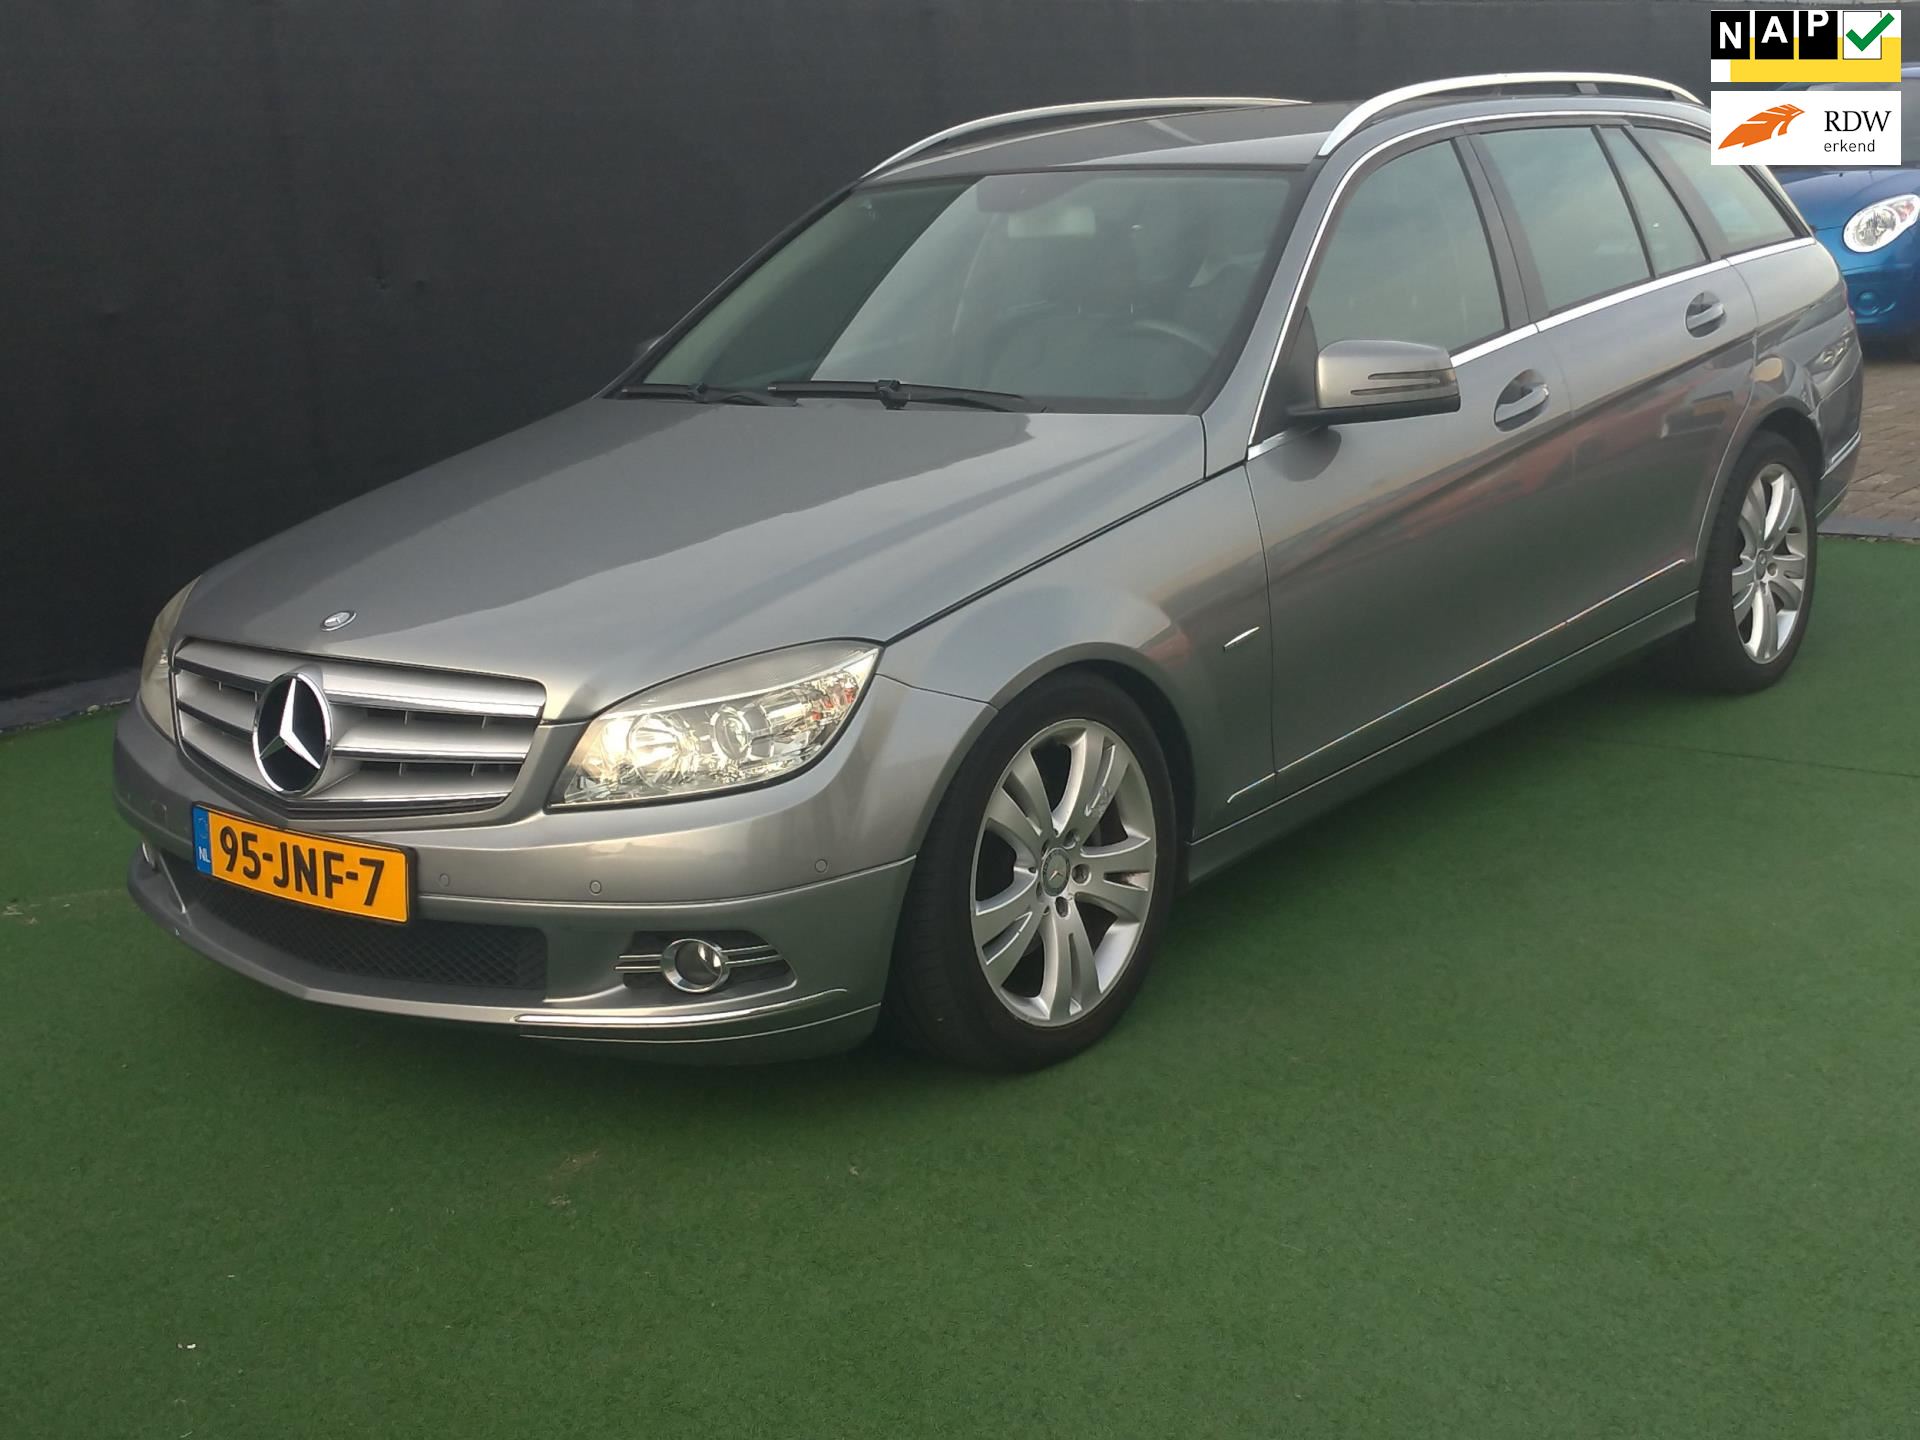 Mercedes-Benz C-klasse Estate occasion - Autohuis Zeewolde